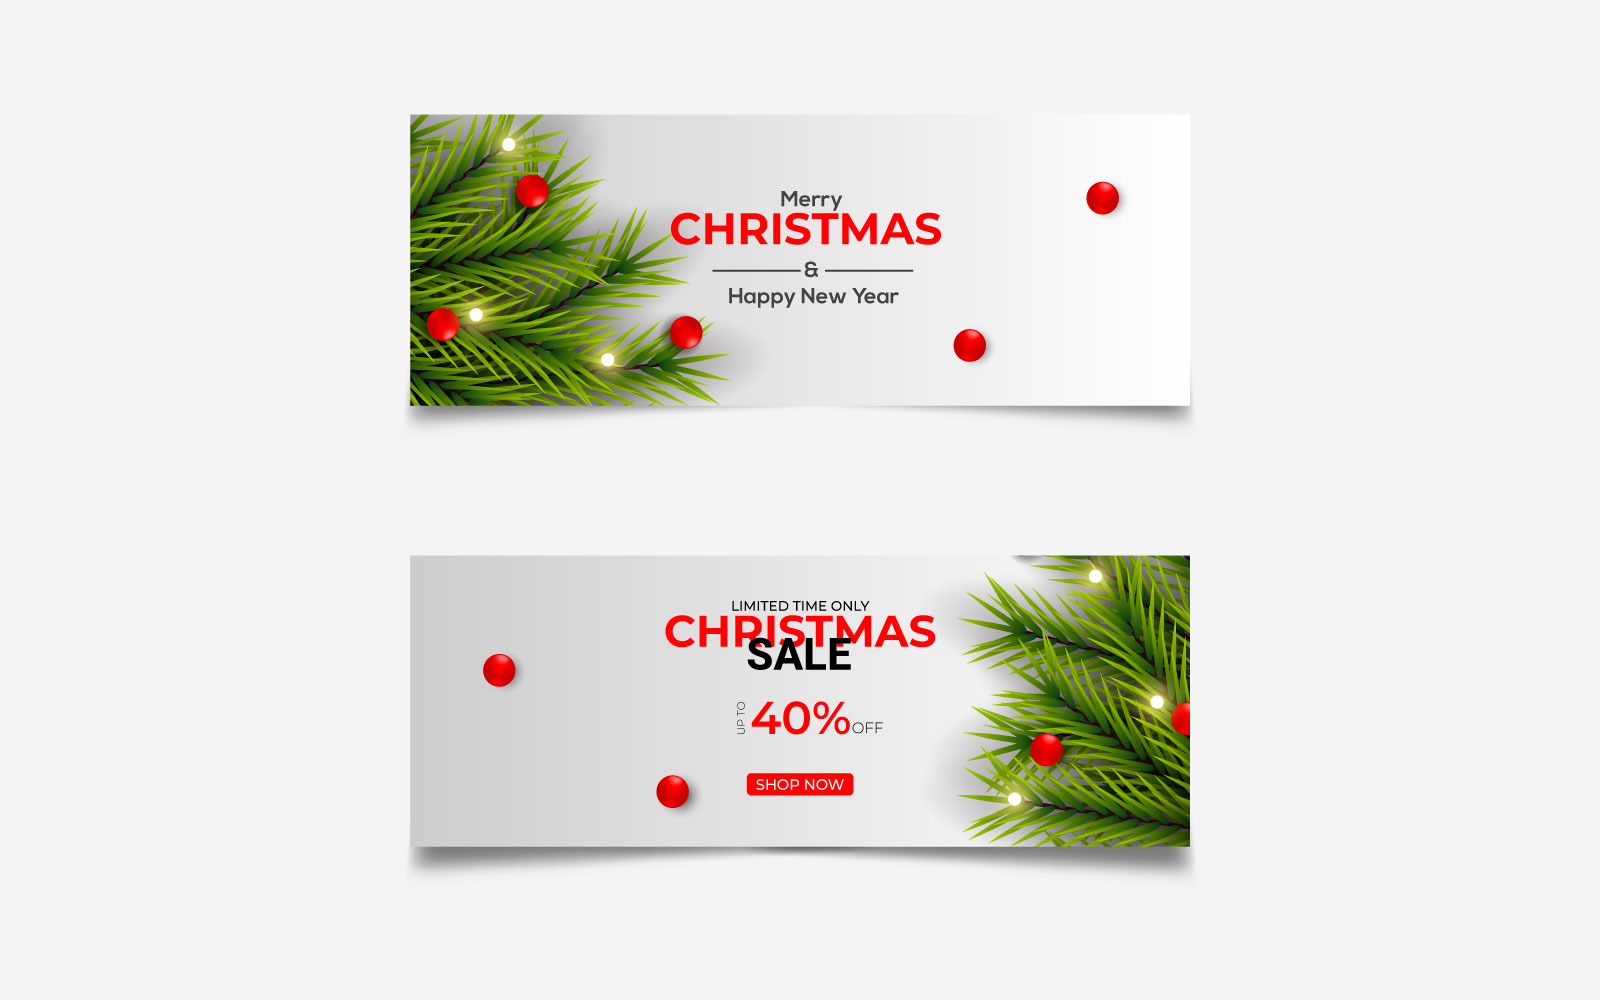 Merry Christmas season celebration social media cover template and christmas sale